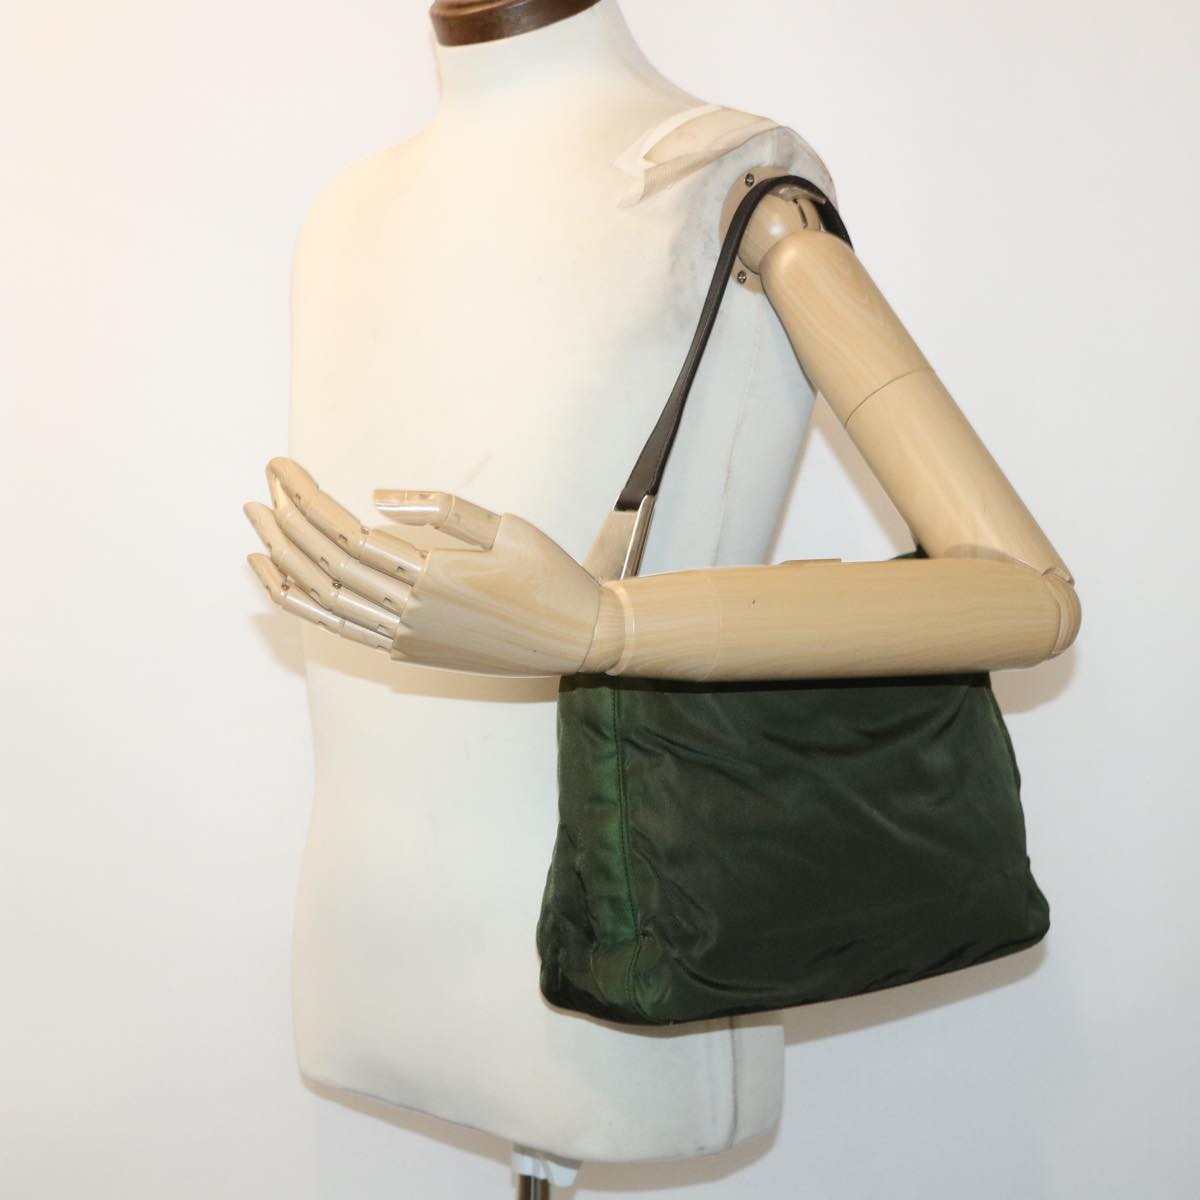 PRADA Shoulder Bag Nylon Green Auth cl654